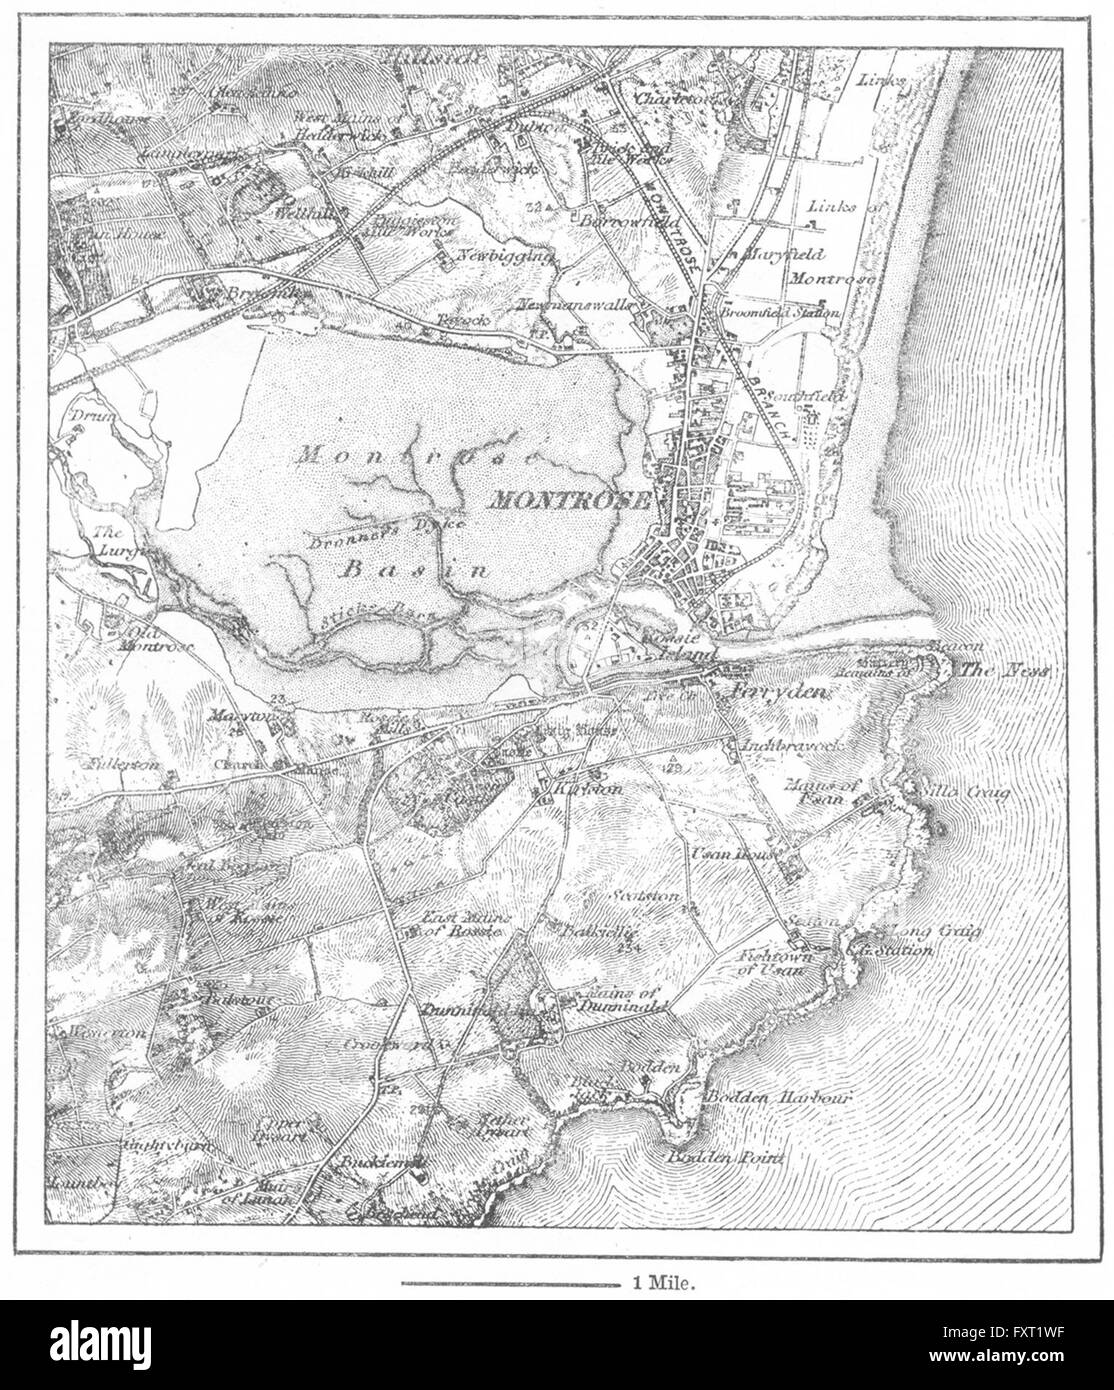 SCOTLAND: Montrose, sketch map, c1885 Stock Photo